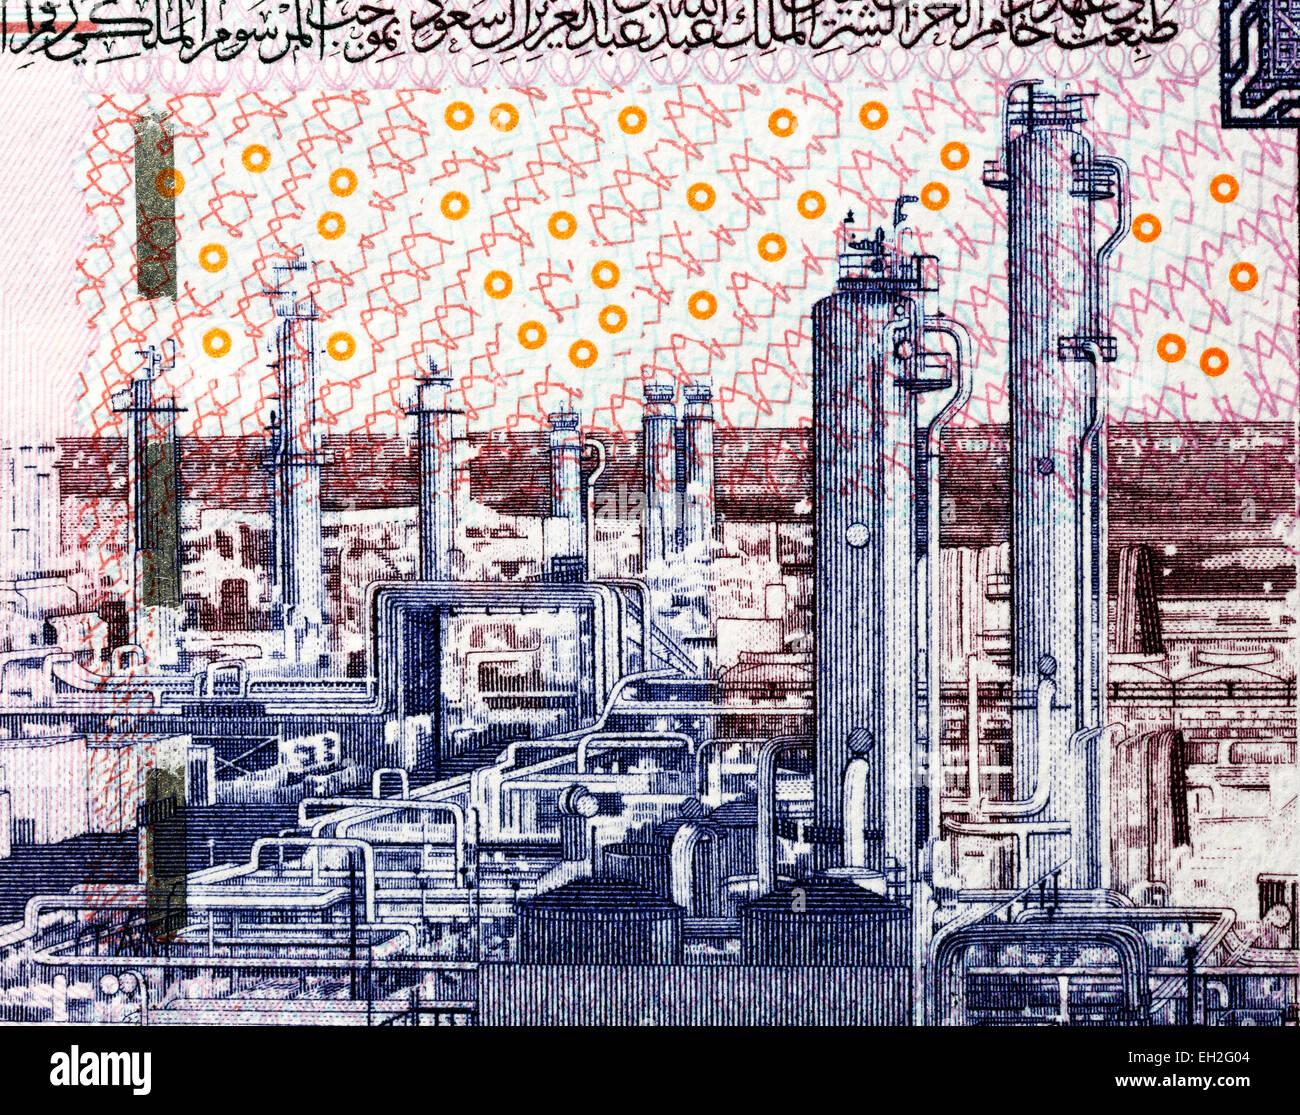 Oil refinery from 5 Riyals banknote, Saudi Arabia, 2009 Stock Photo